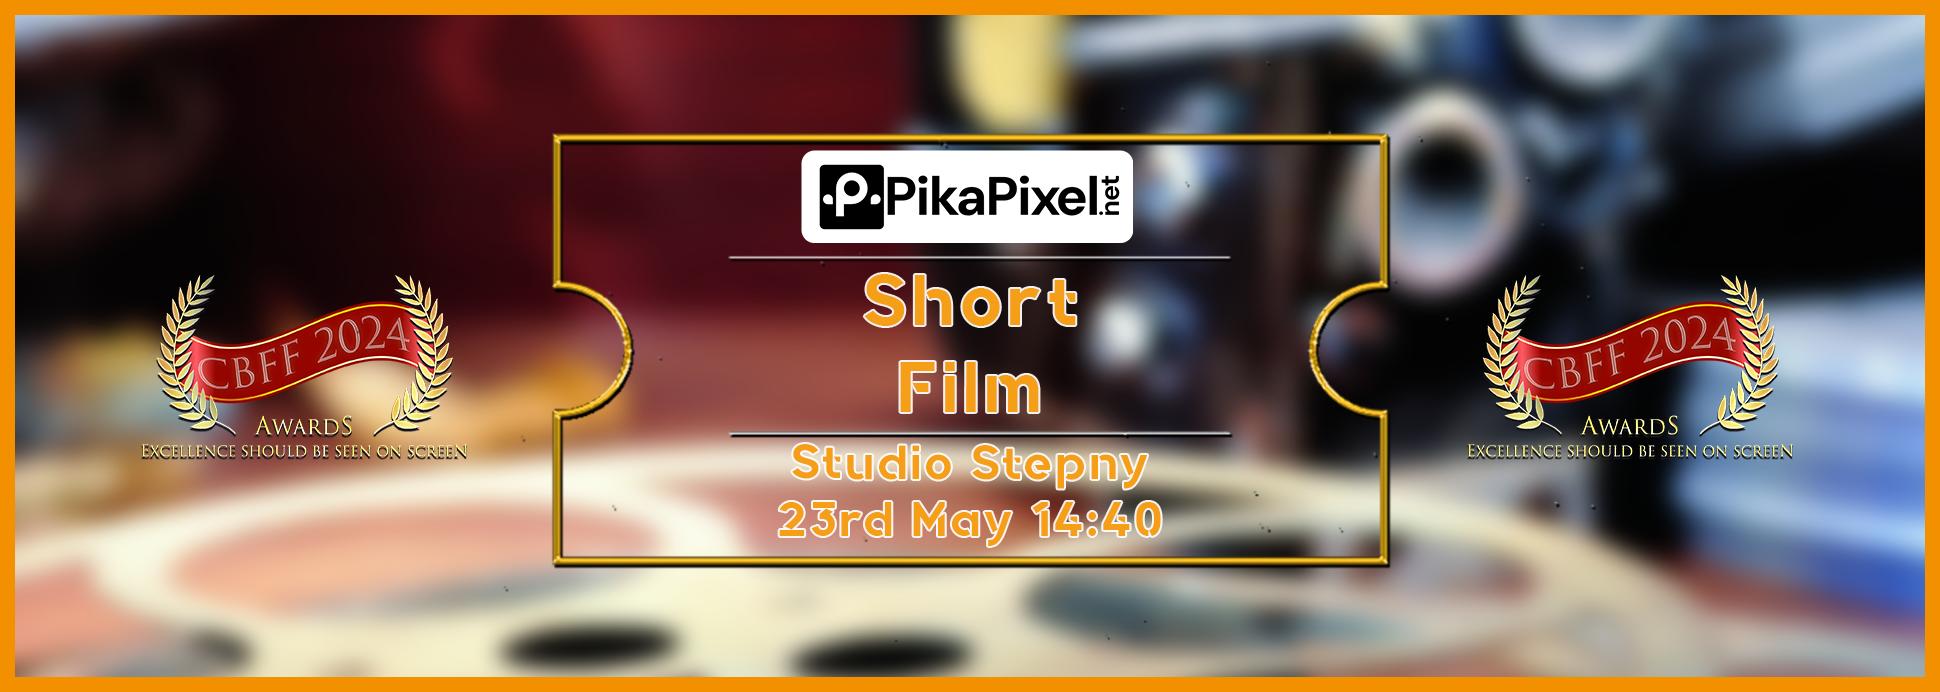 Thursday 23rd 14:40 Studio Stepny Short Film